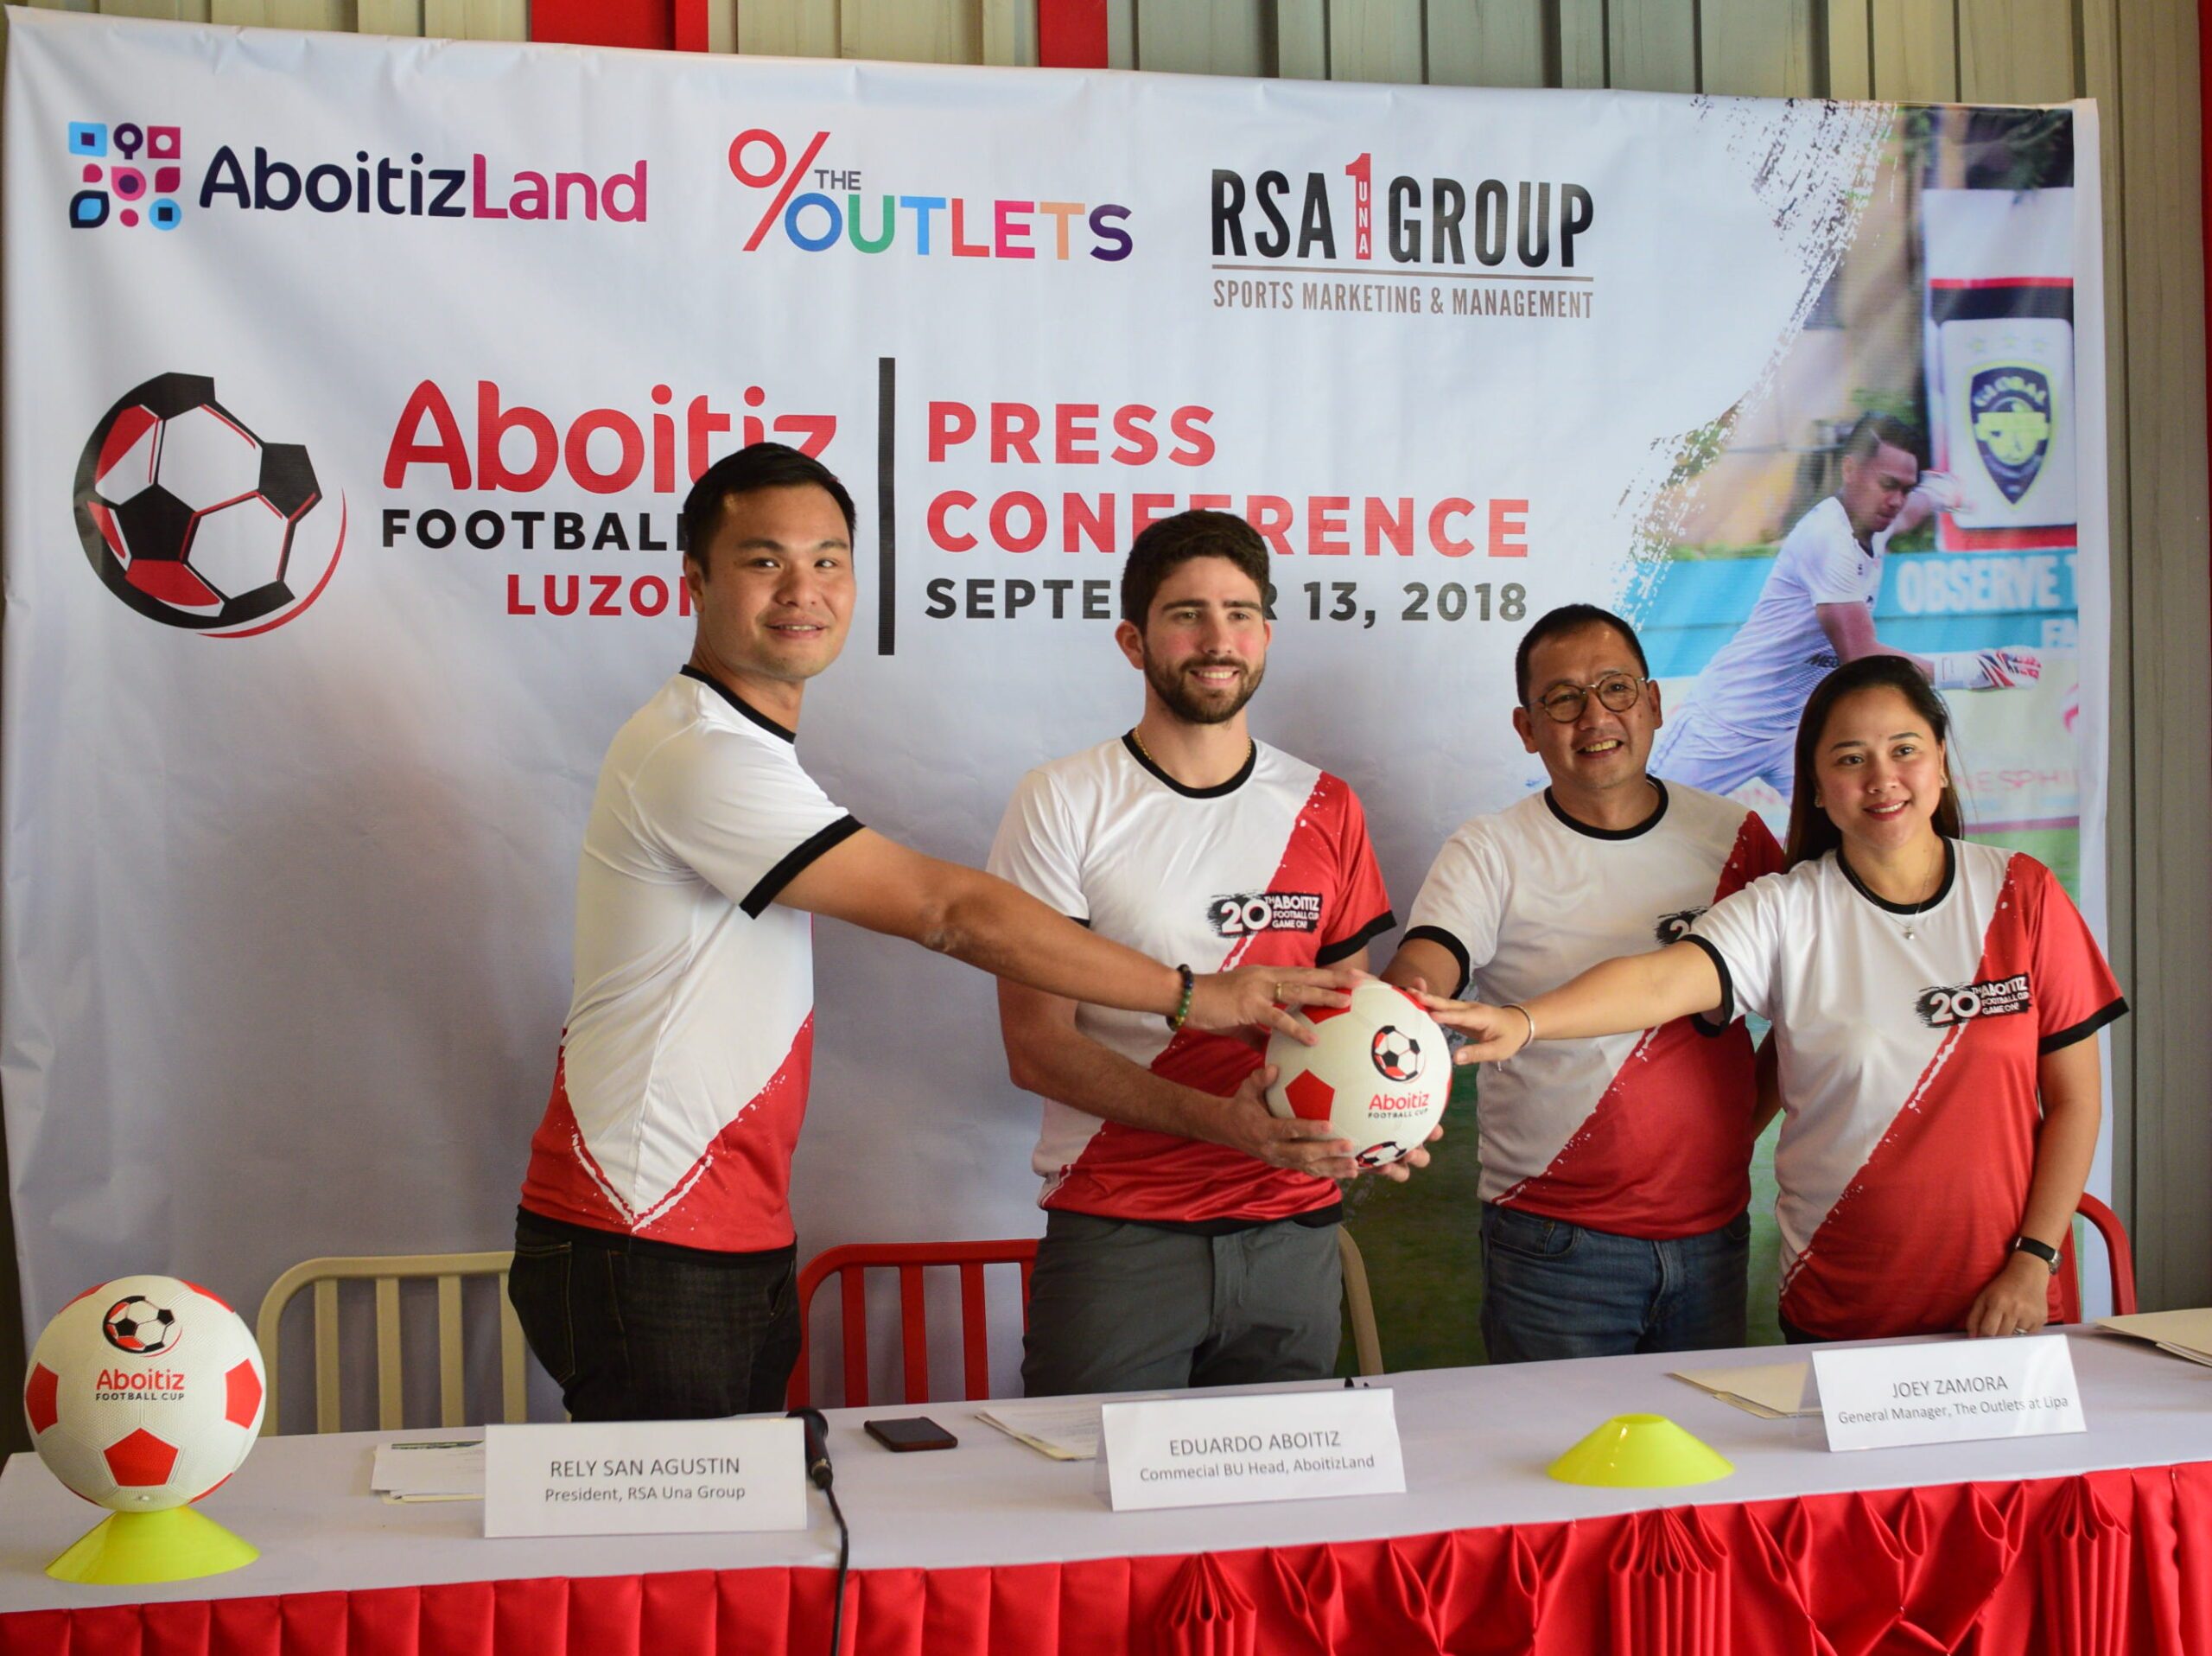 Visayas football event comes to Batangas